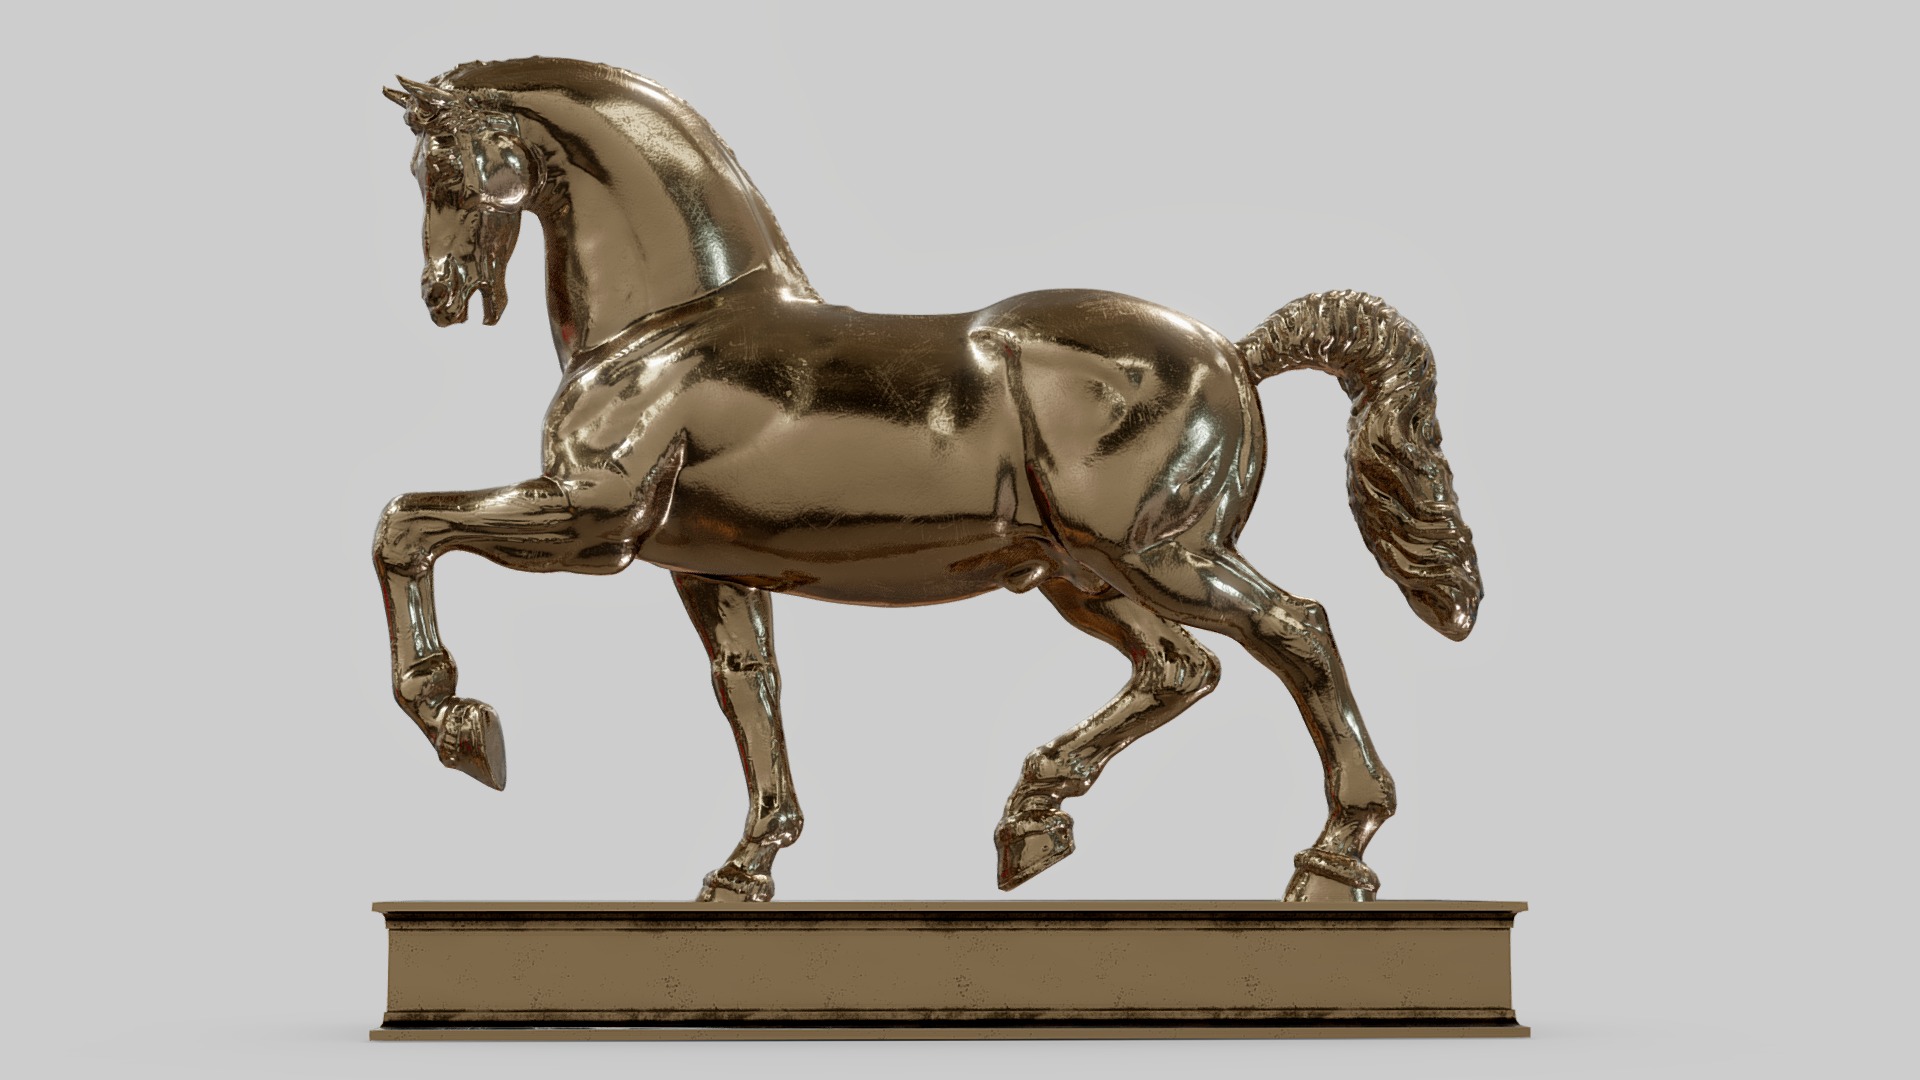 3D model Leonardo da Vinci – Cavallo - This is a 3D model of the Leonardo da Vinci - Cavallo. The 3D model is about a statue of a horse.